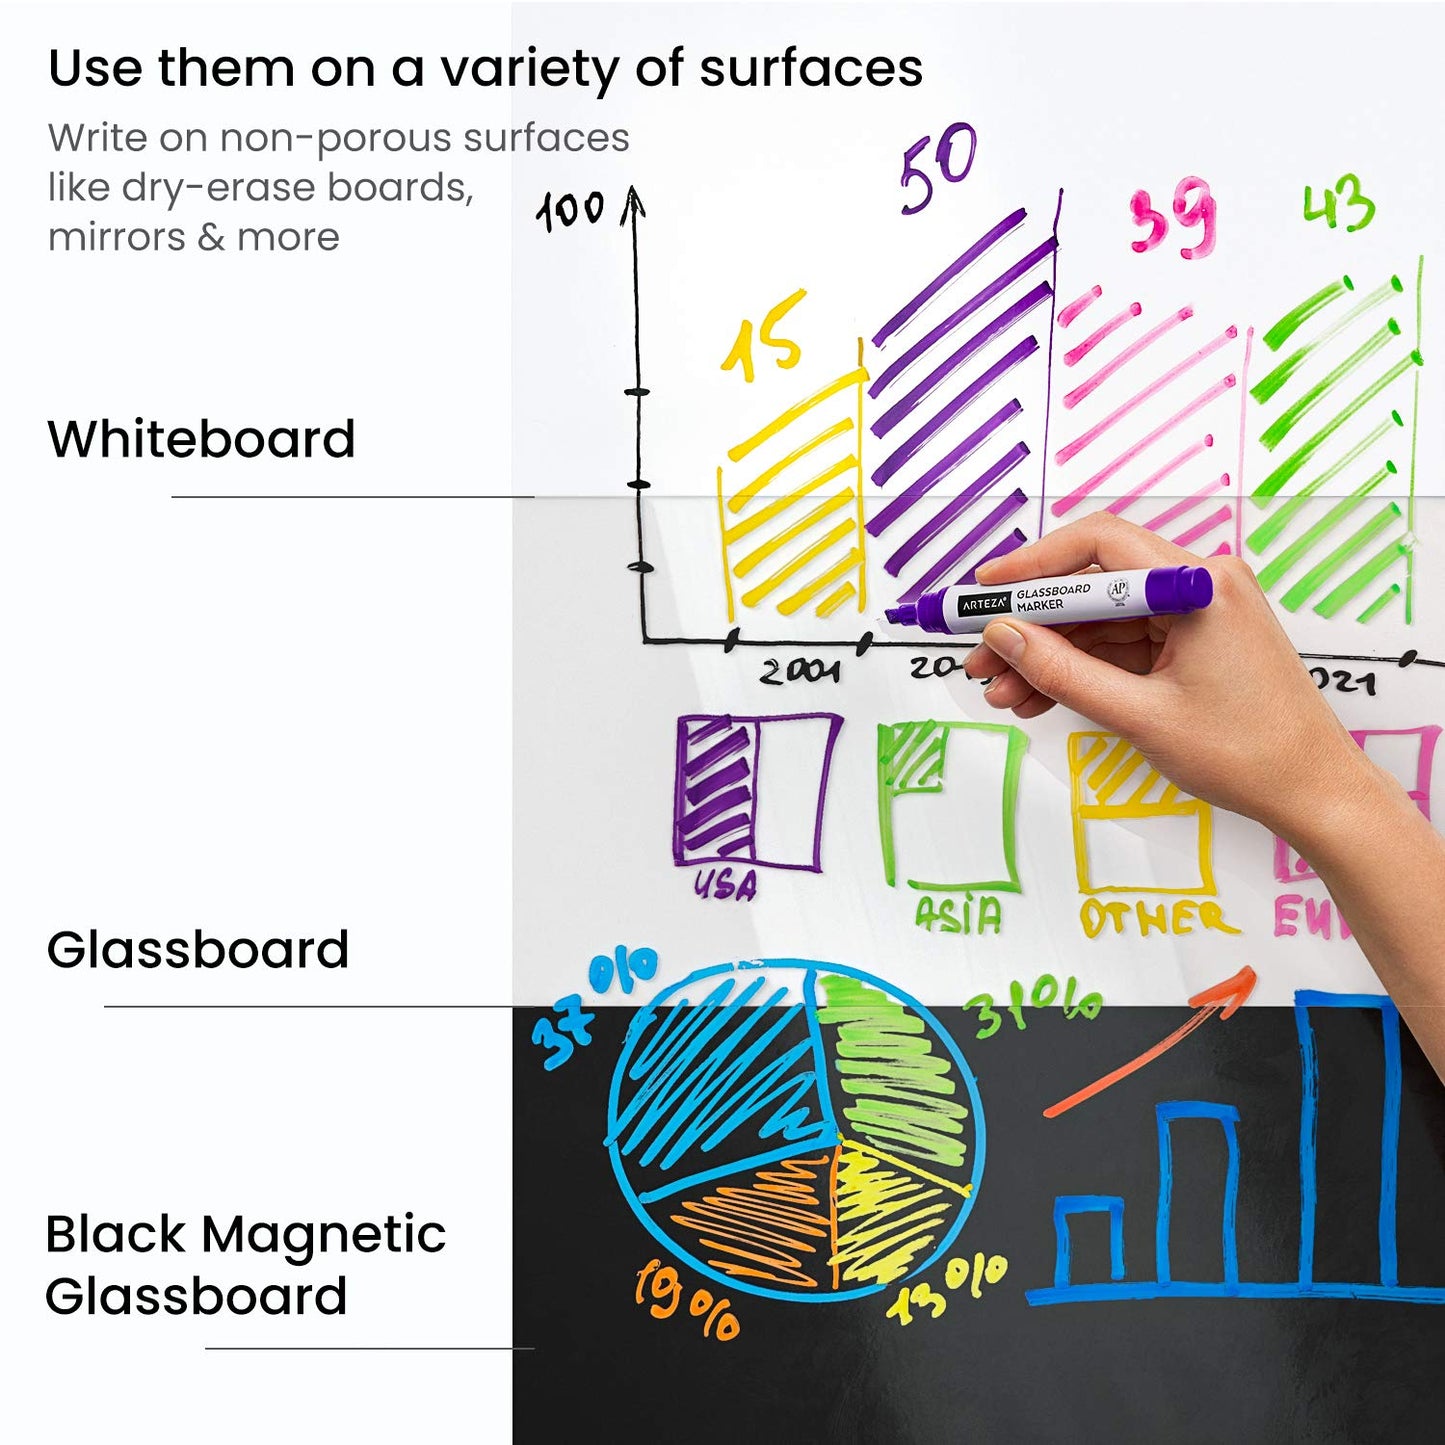 Arteza Glassboard Markers, Classic & Neon Colors - Set of 18